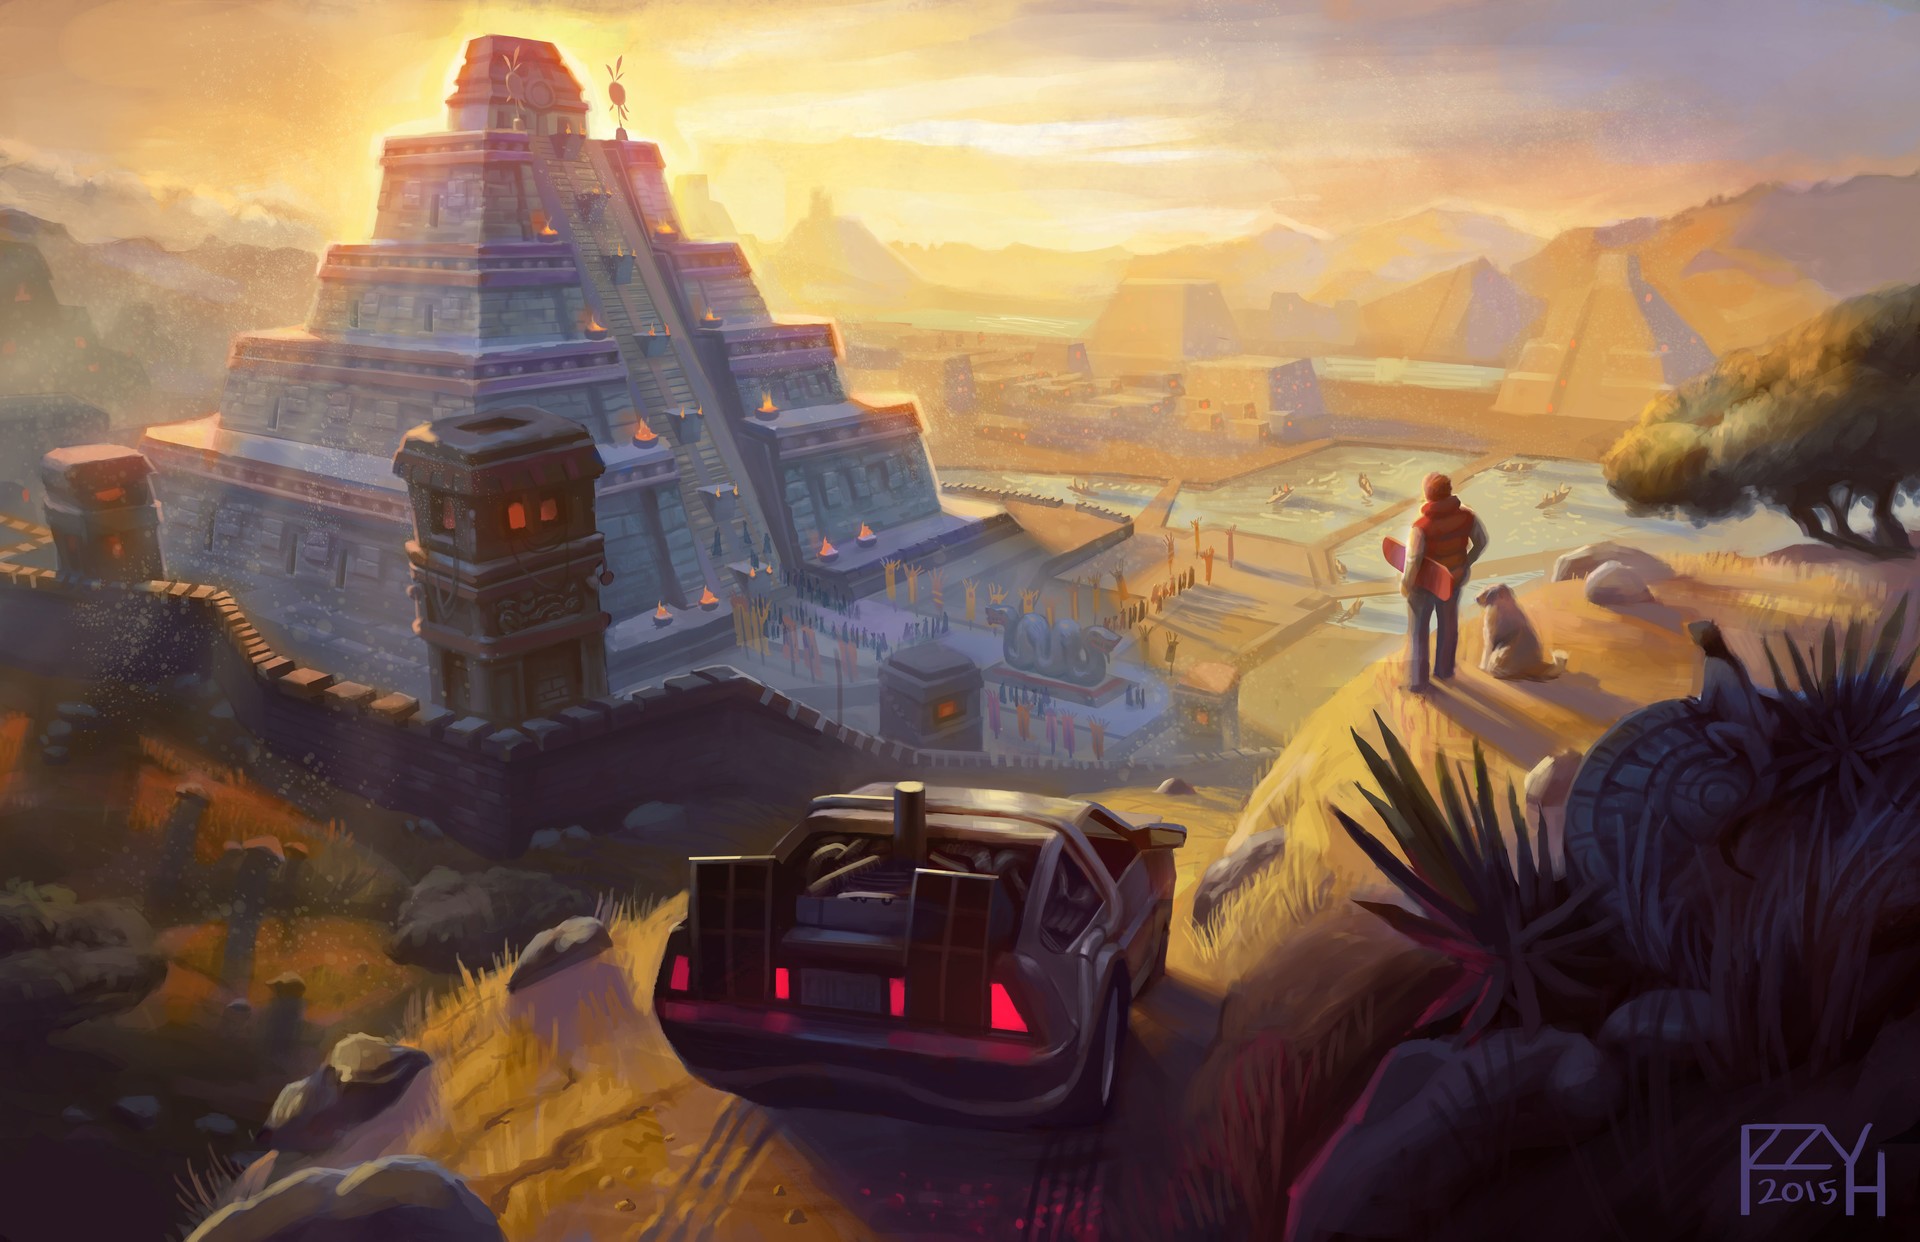 Artwork Fantasy Art Back To The Future DeLorean Pyramid Movies Mayan Aztec Maya Civilization Waterma 1920x1242